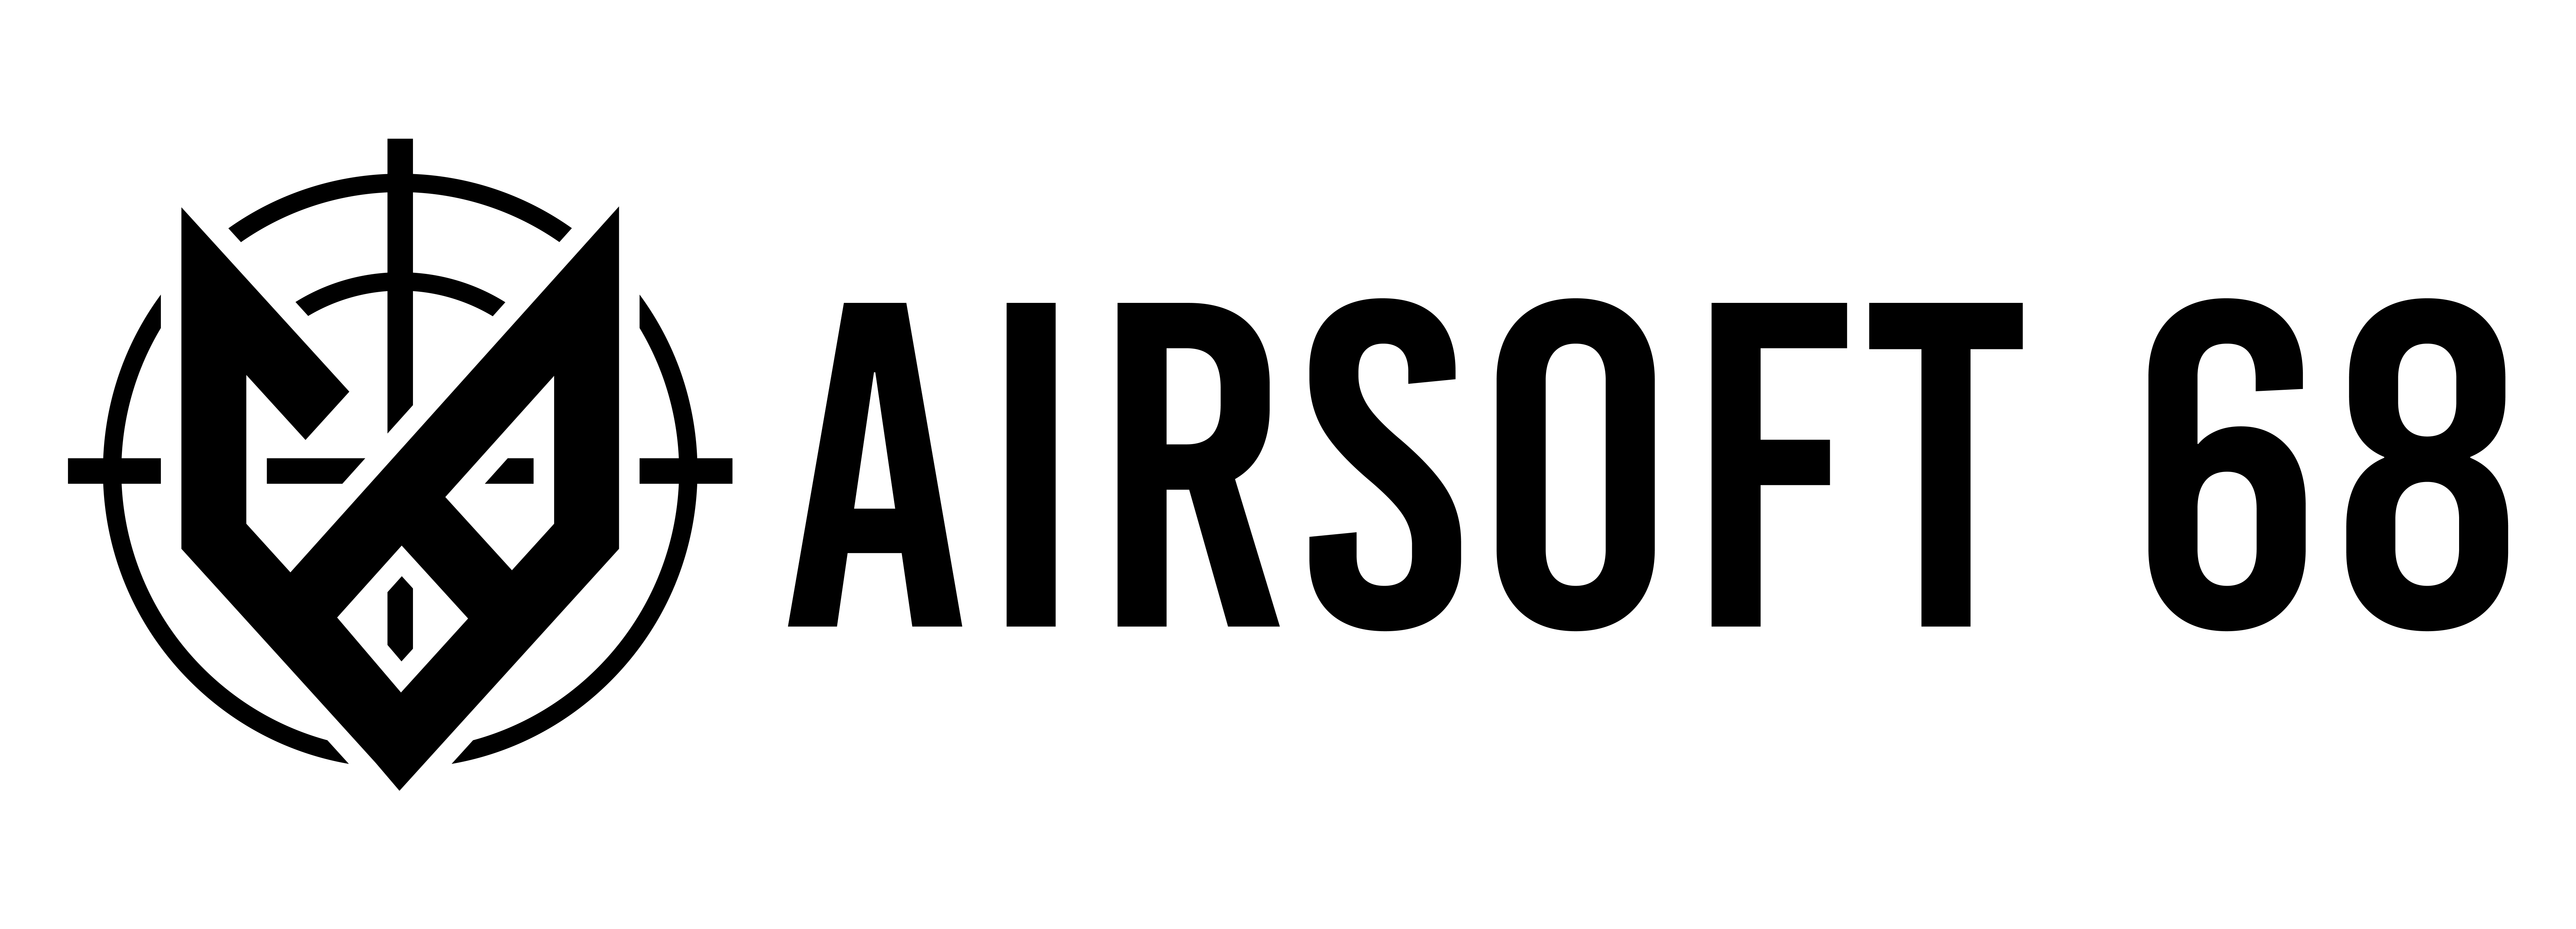 Airsoft 68